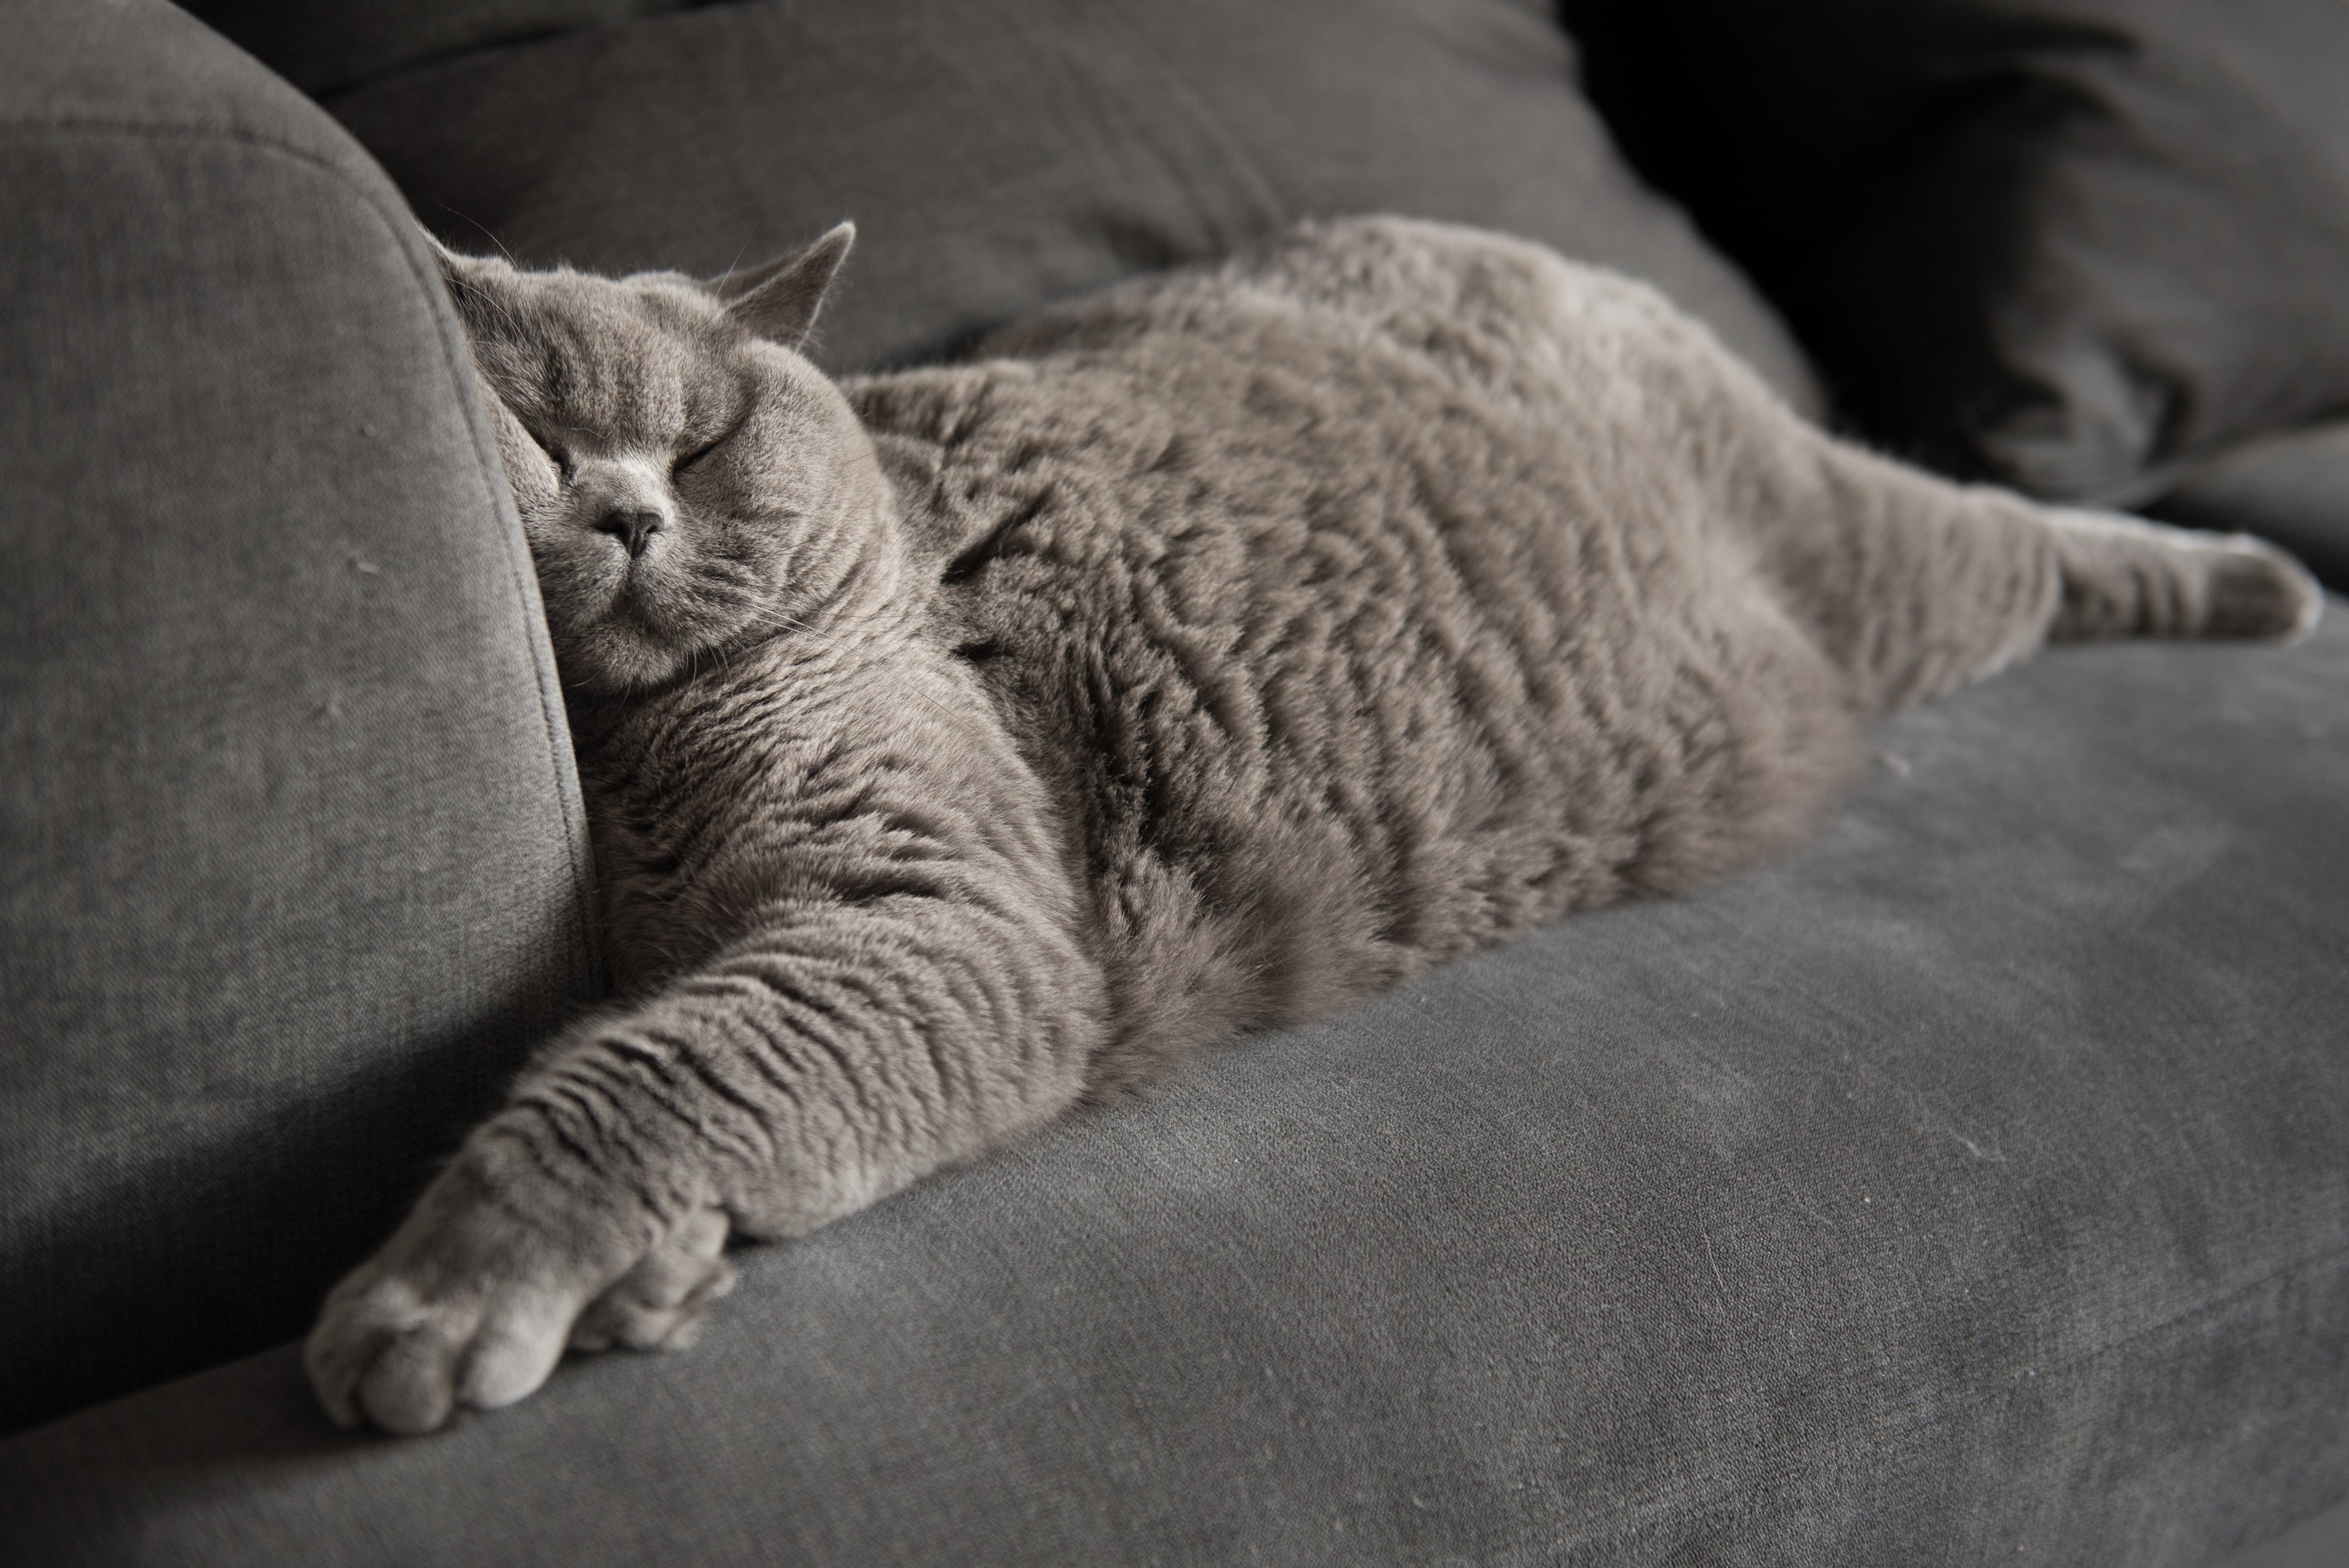 Sleeping cat on sofa